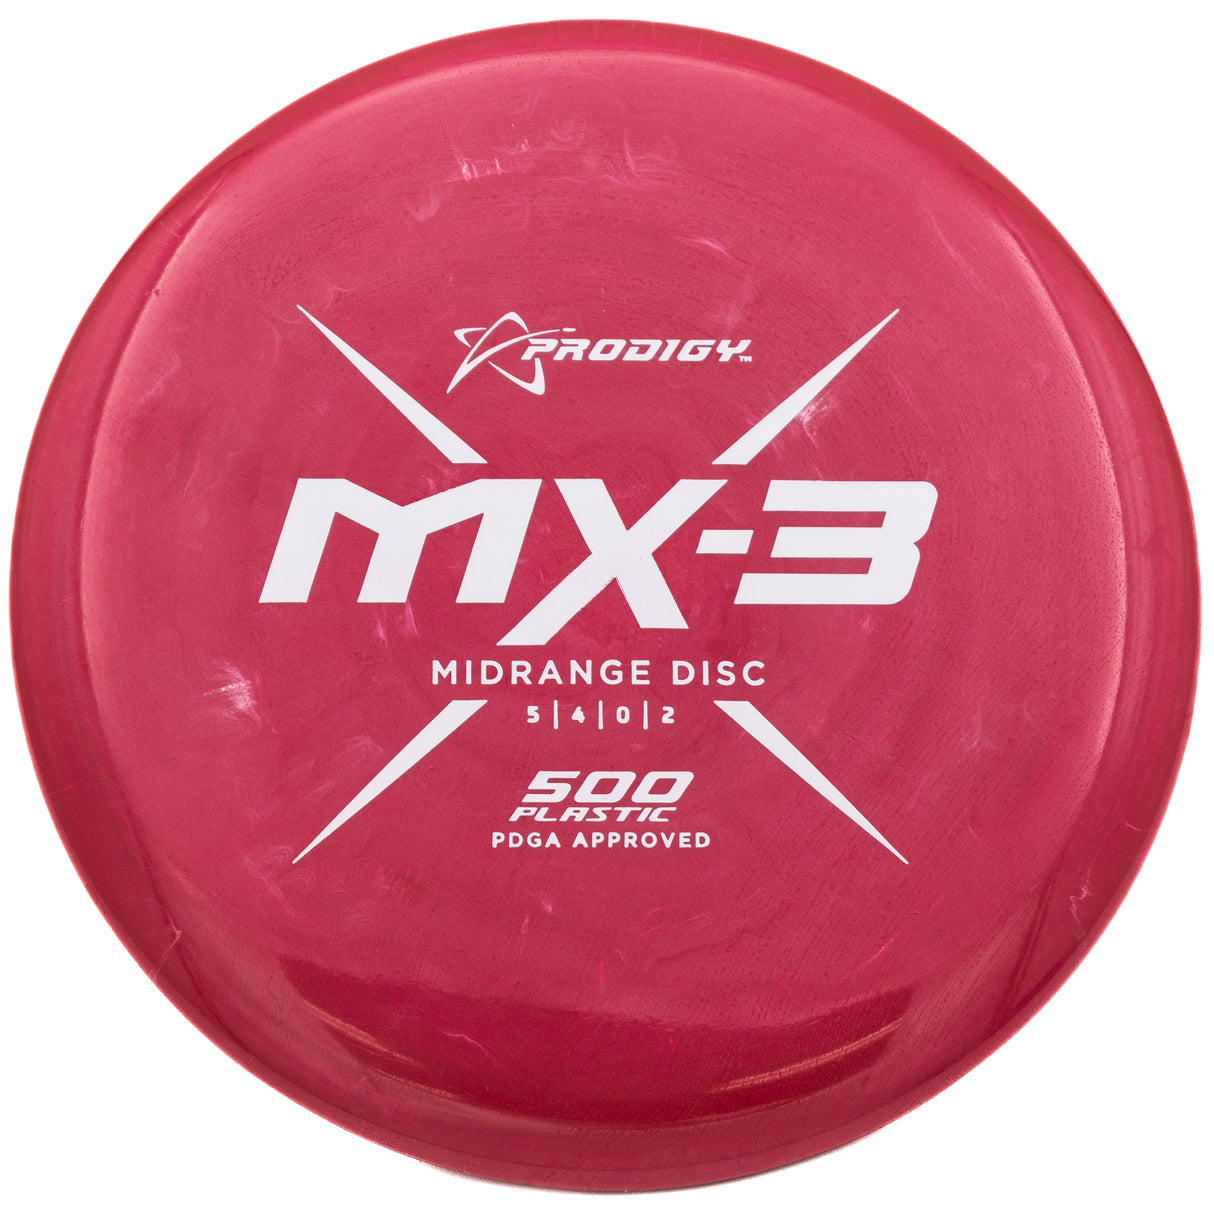 Prodigy MX-3 - 500 183g | Style 0001